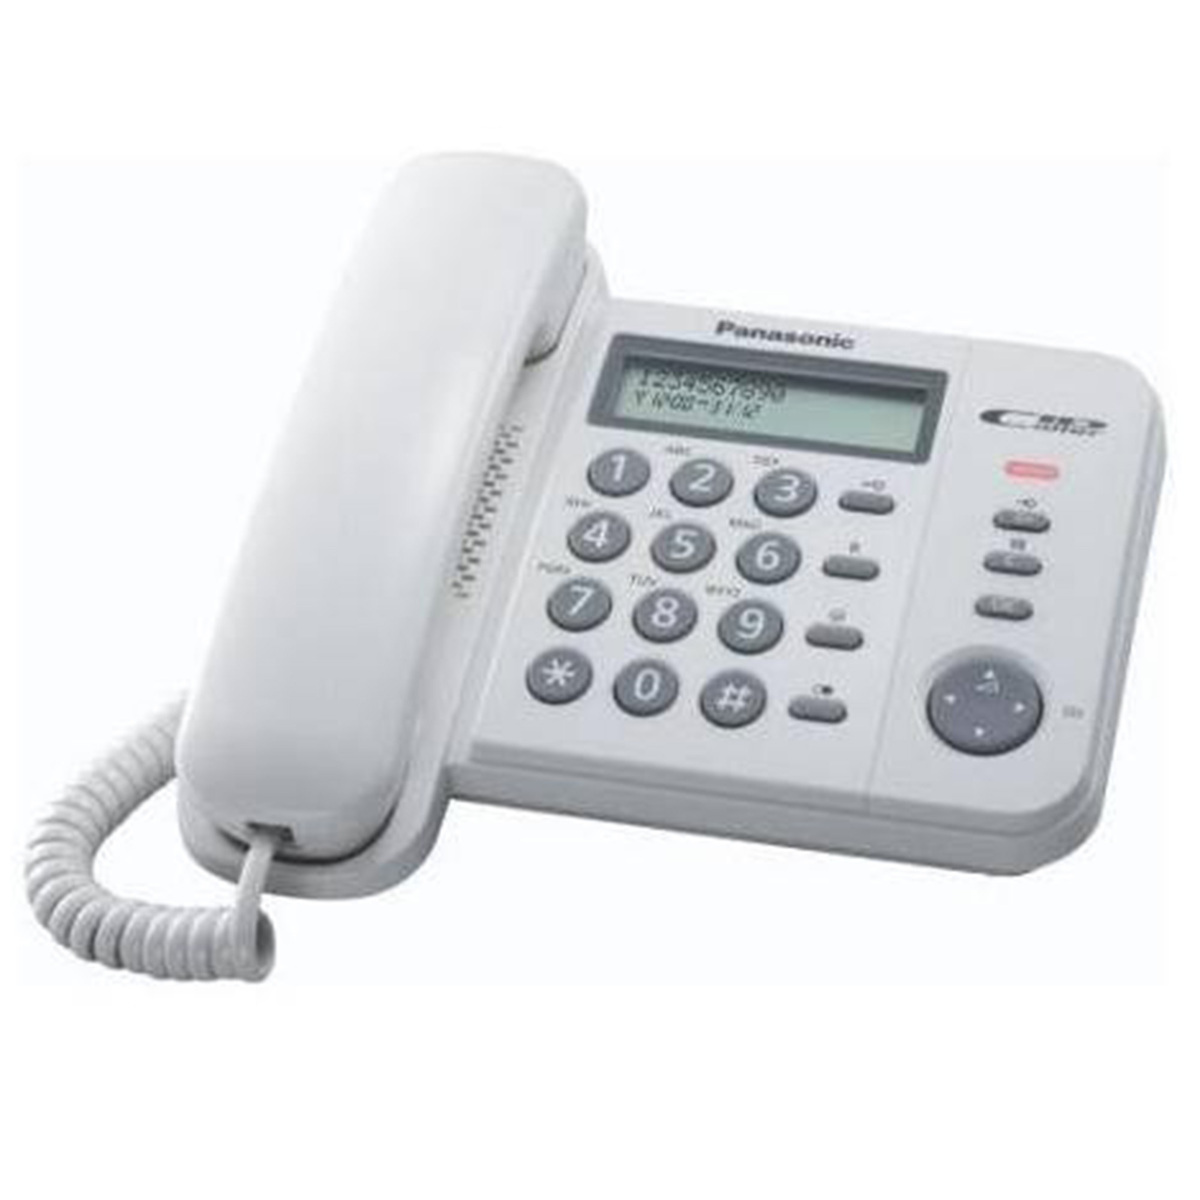 Panasonic Corded Standard Telephone, 20 Station Redial Memory, White, KX-TS560MXW